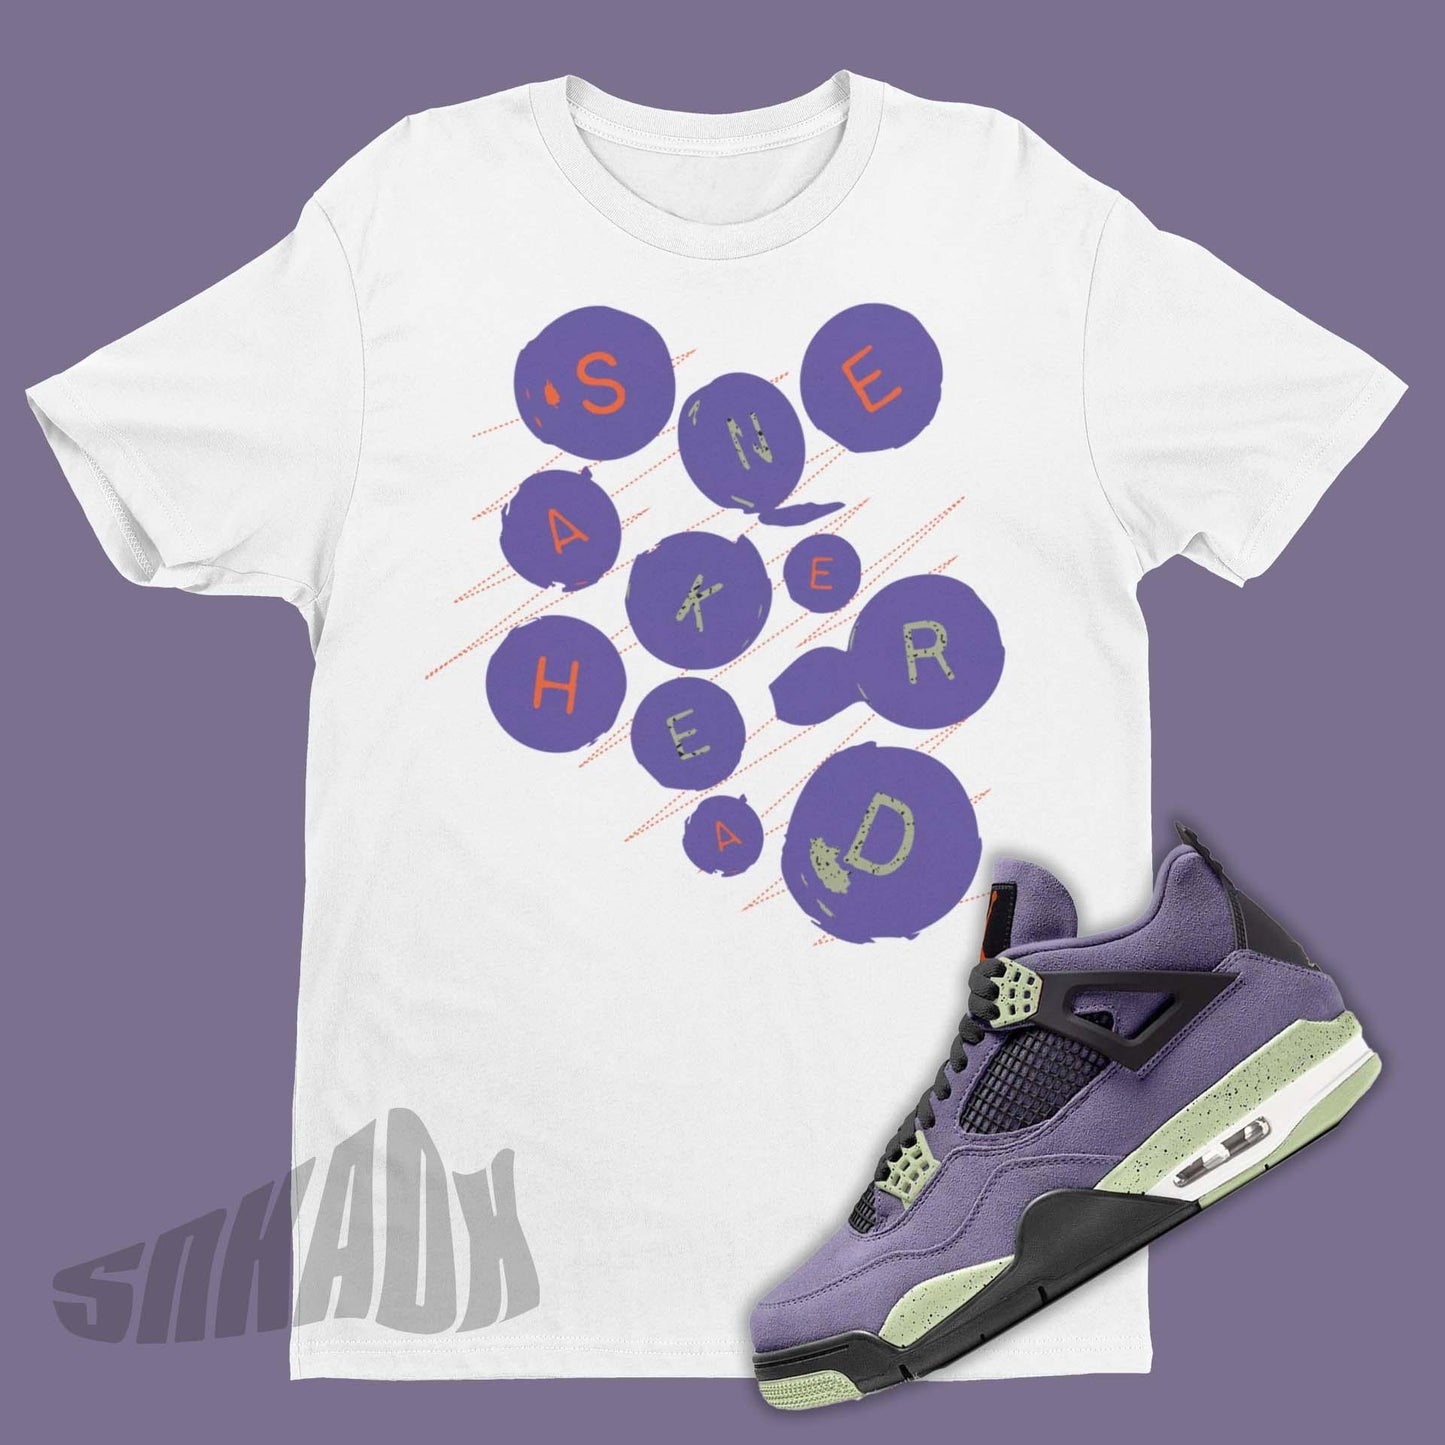 Sneakerhead Shirt To Match Air Jordan 4 Canyon Purple - SNKADX